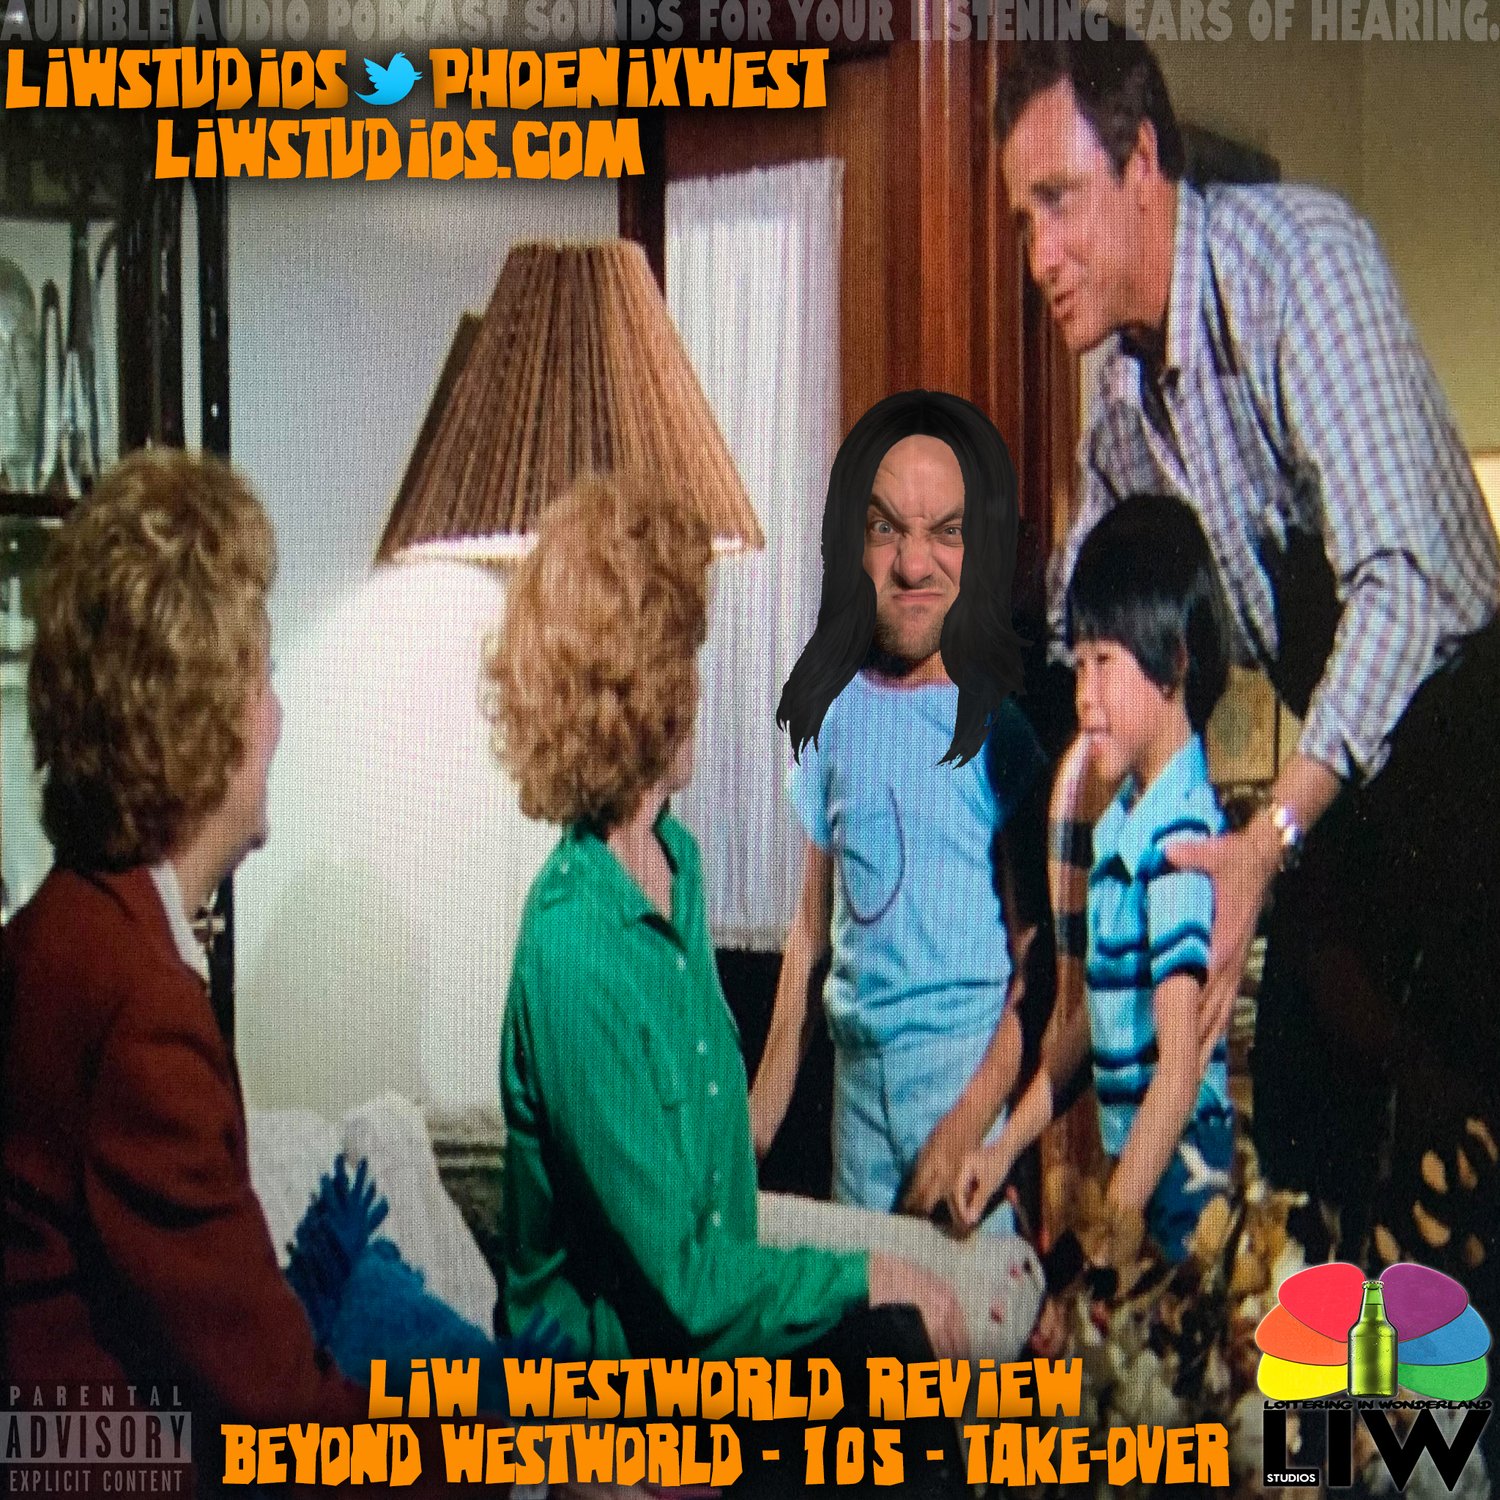 43: Beyond Westworld - 105 - Takeover